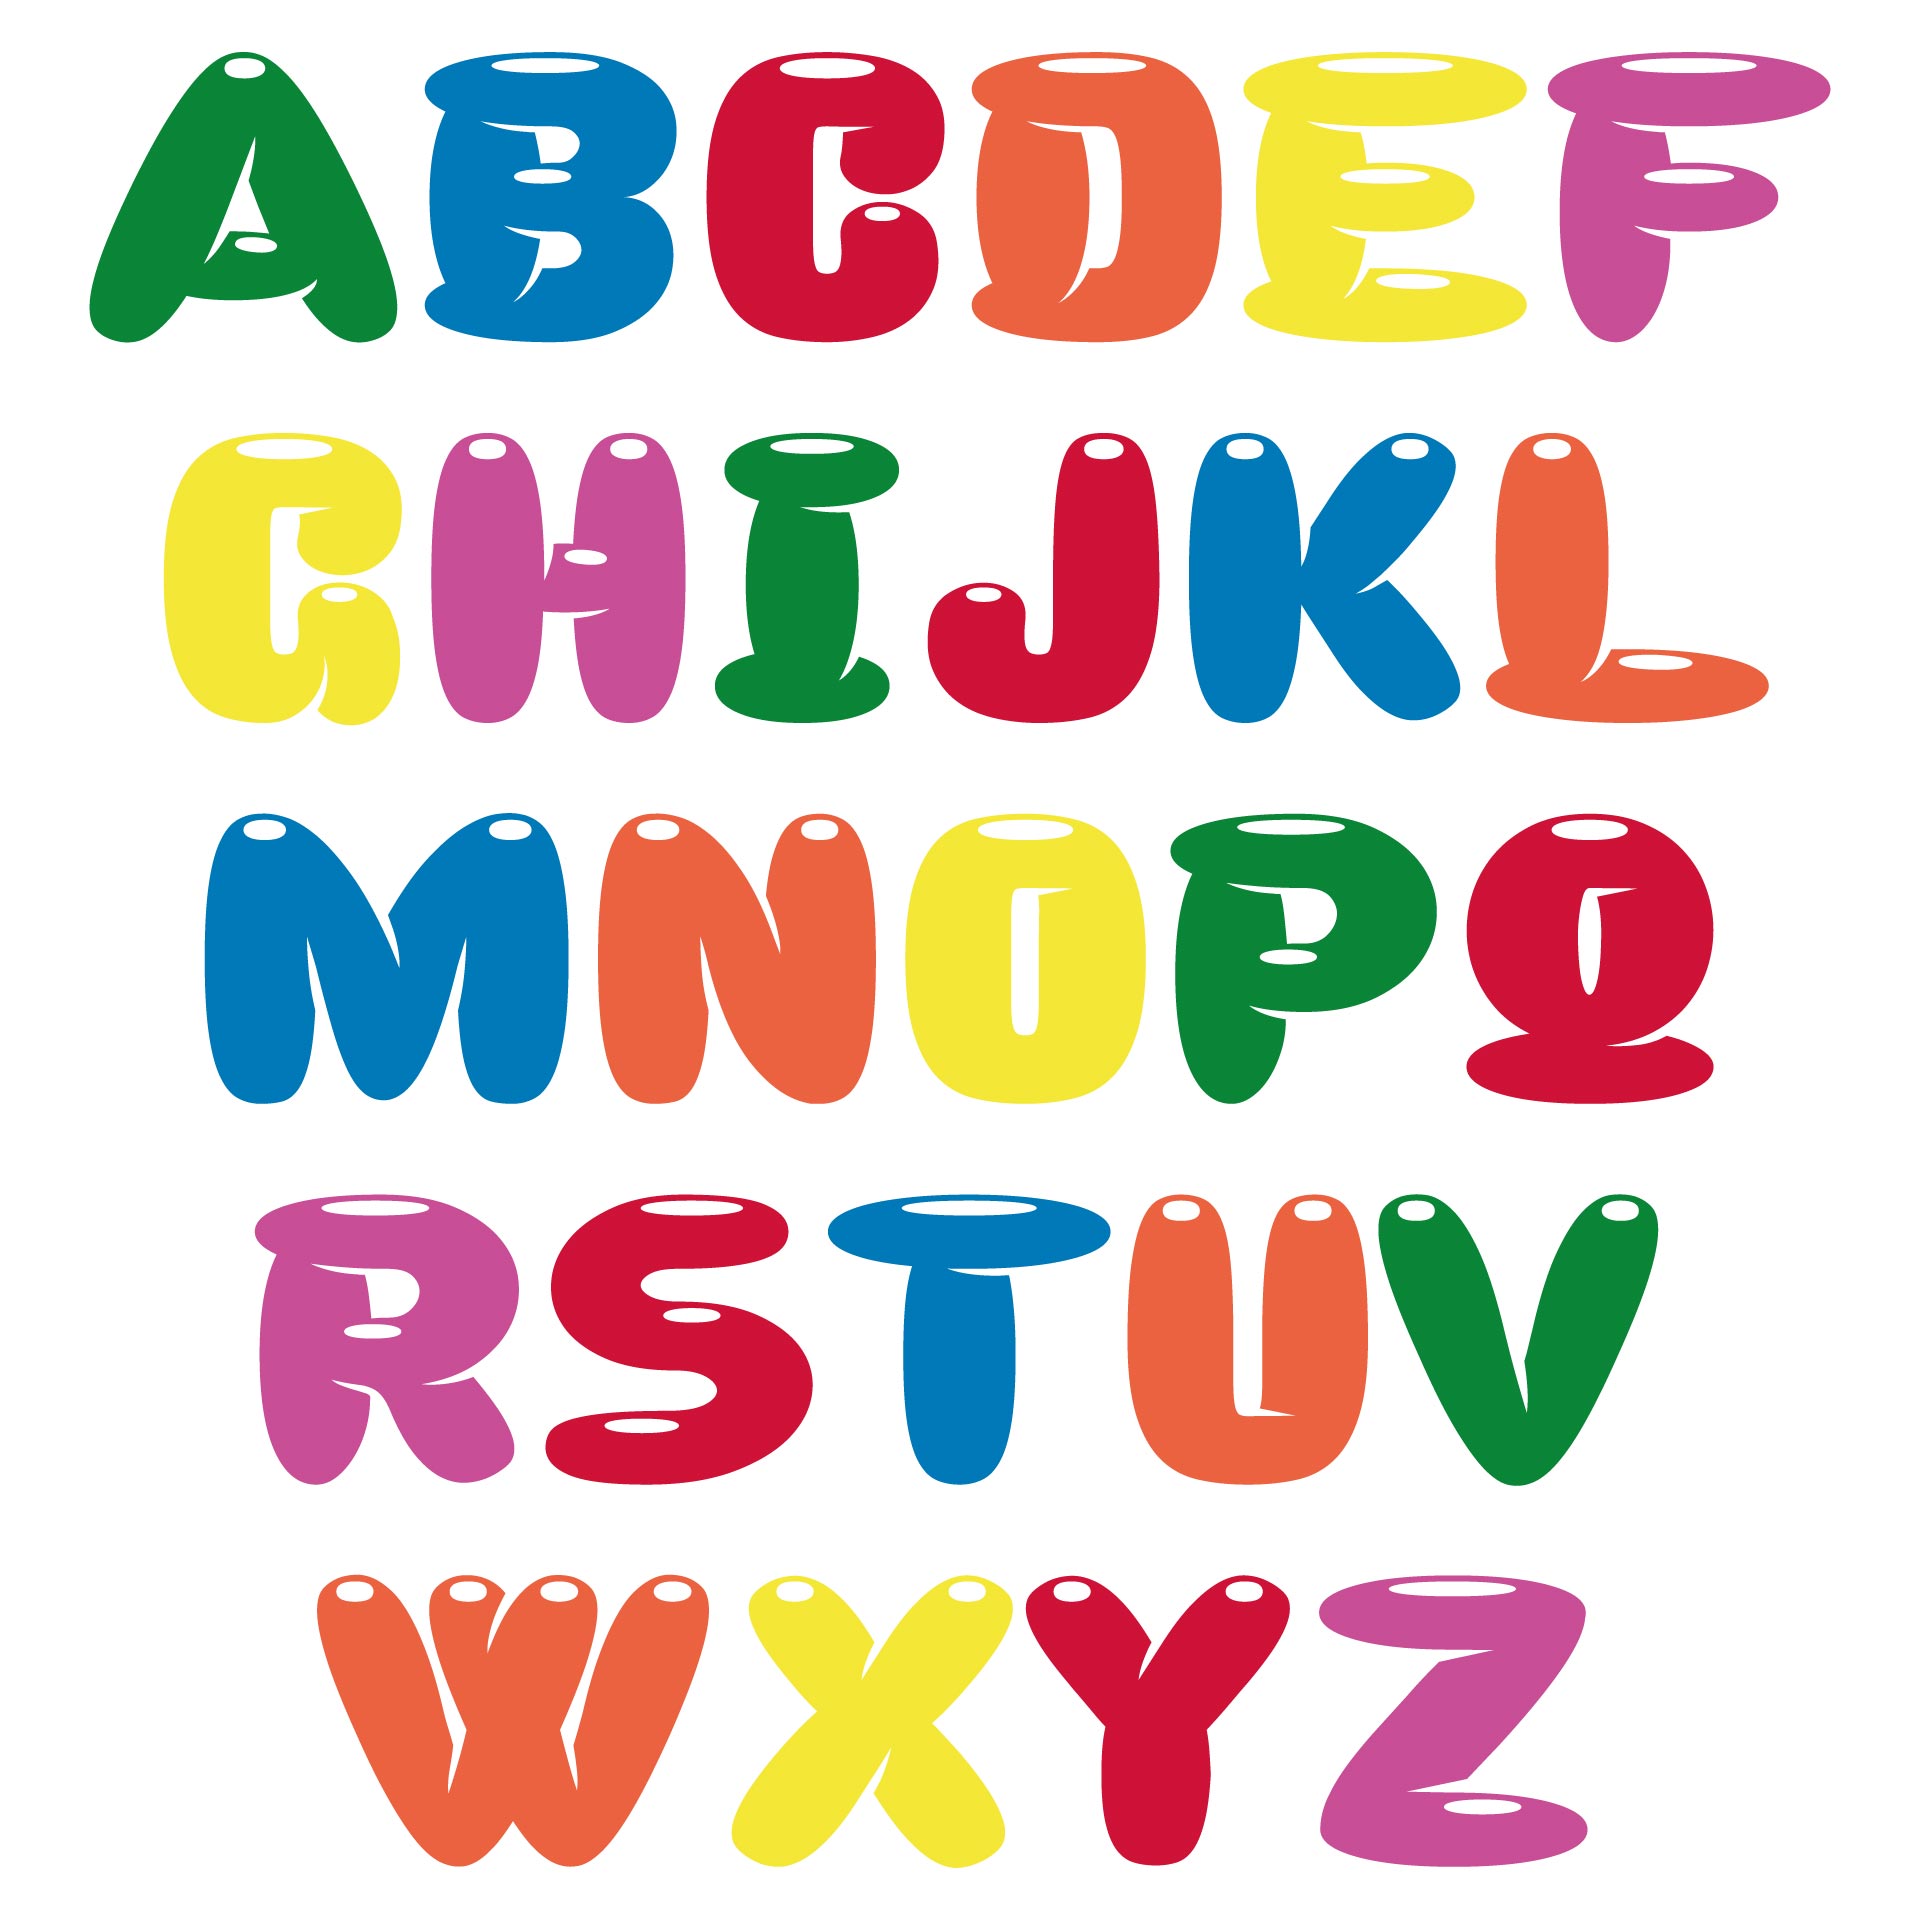 bubble letter font in microsoft word